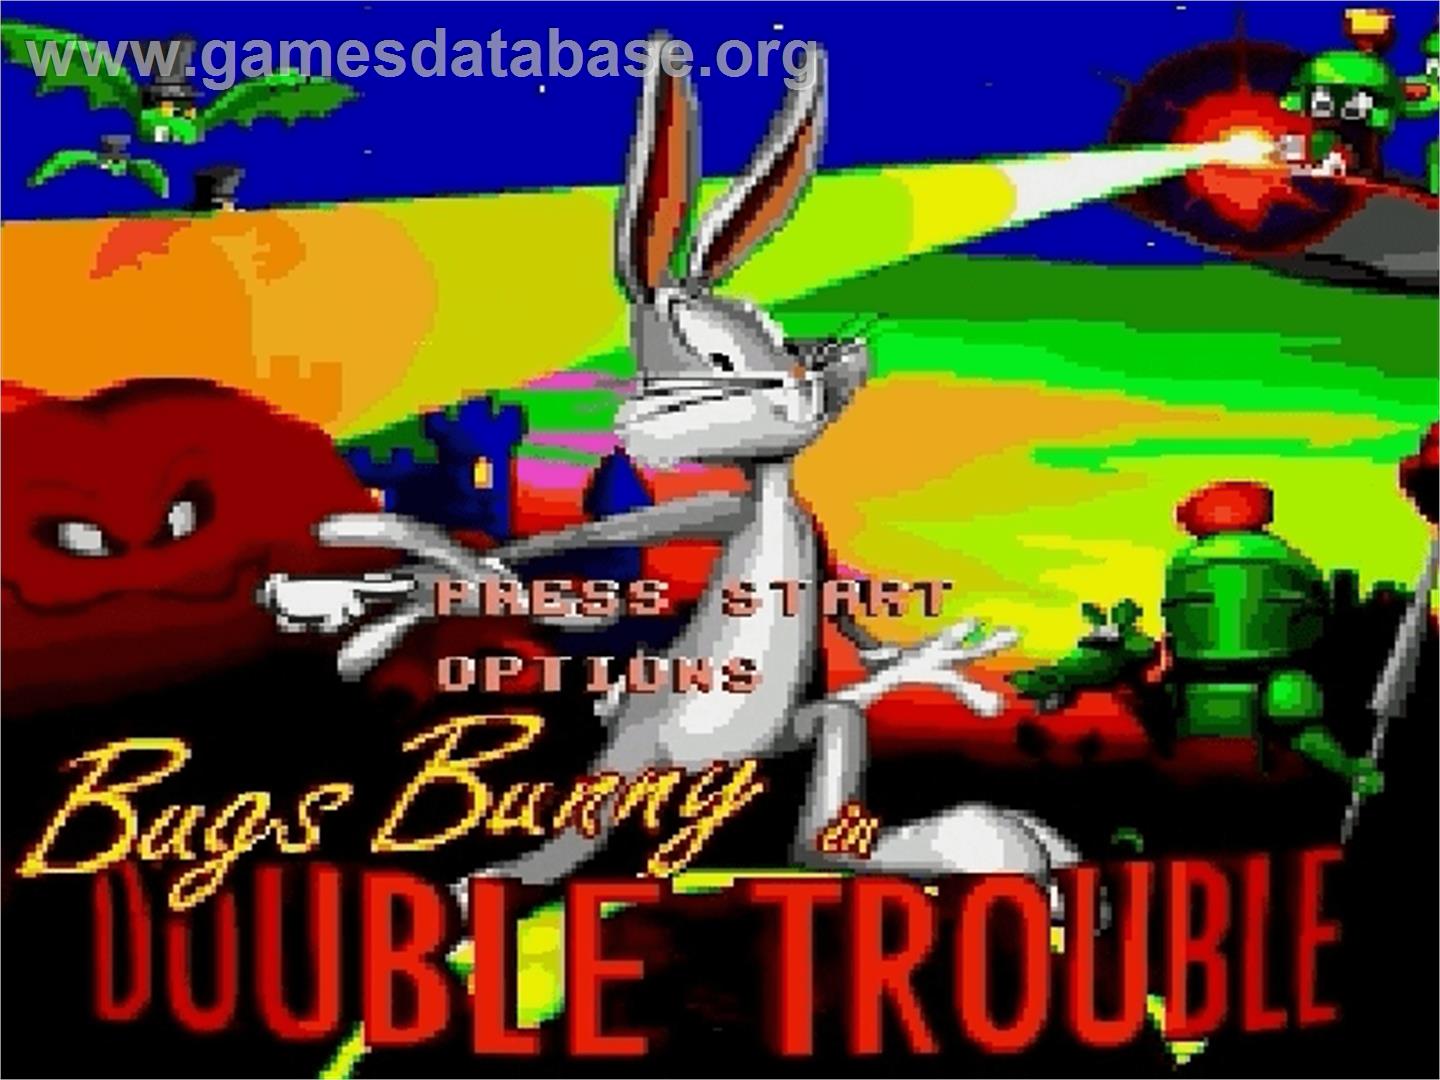 Bugs Bunny in Double Trouble - Sega Genesis - Artwork - Title Screen